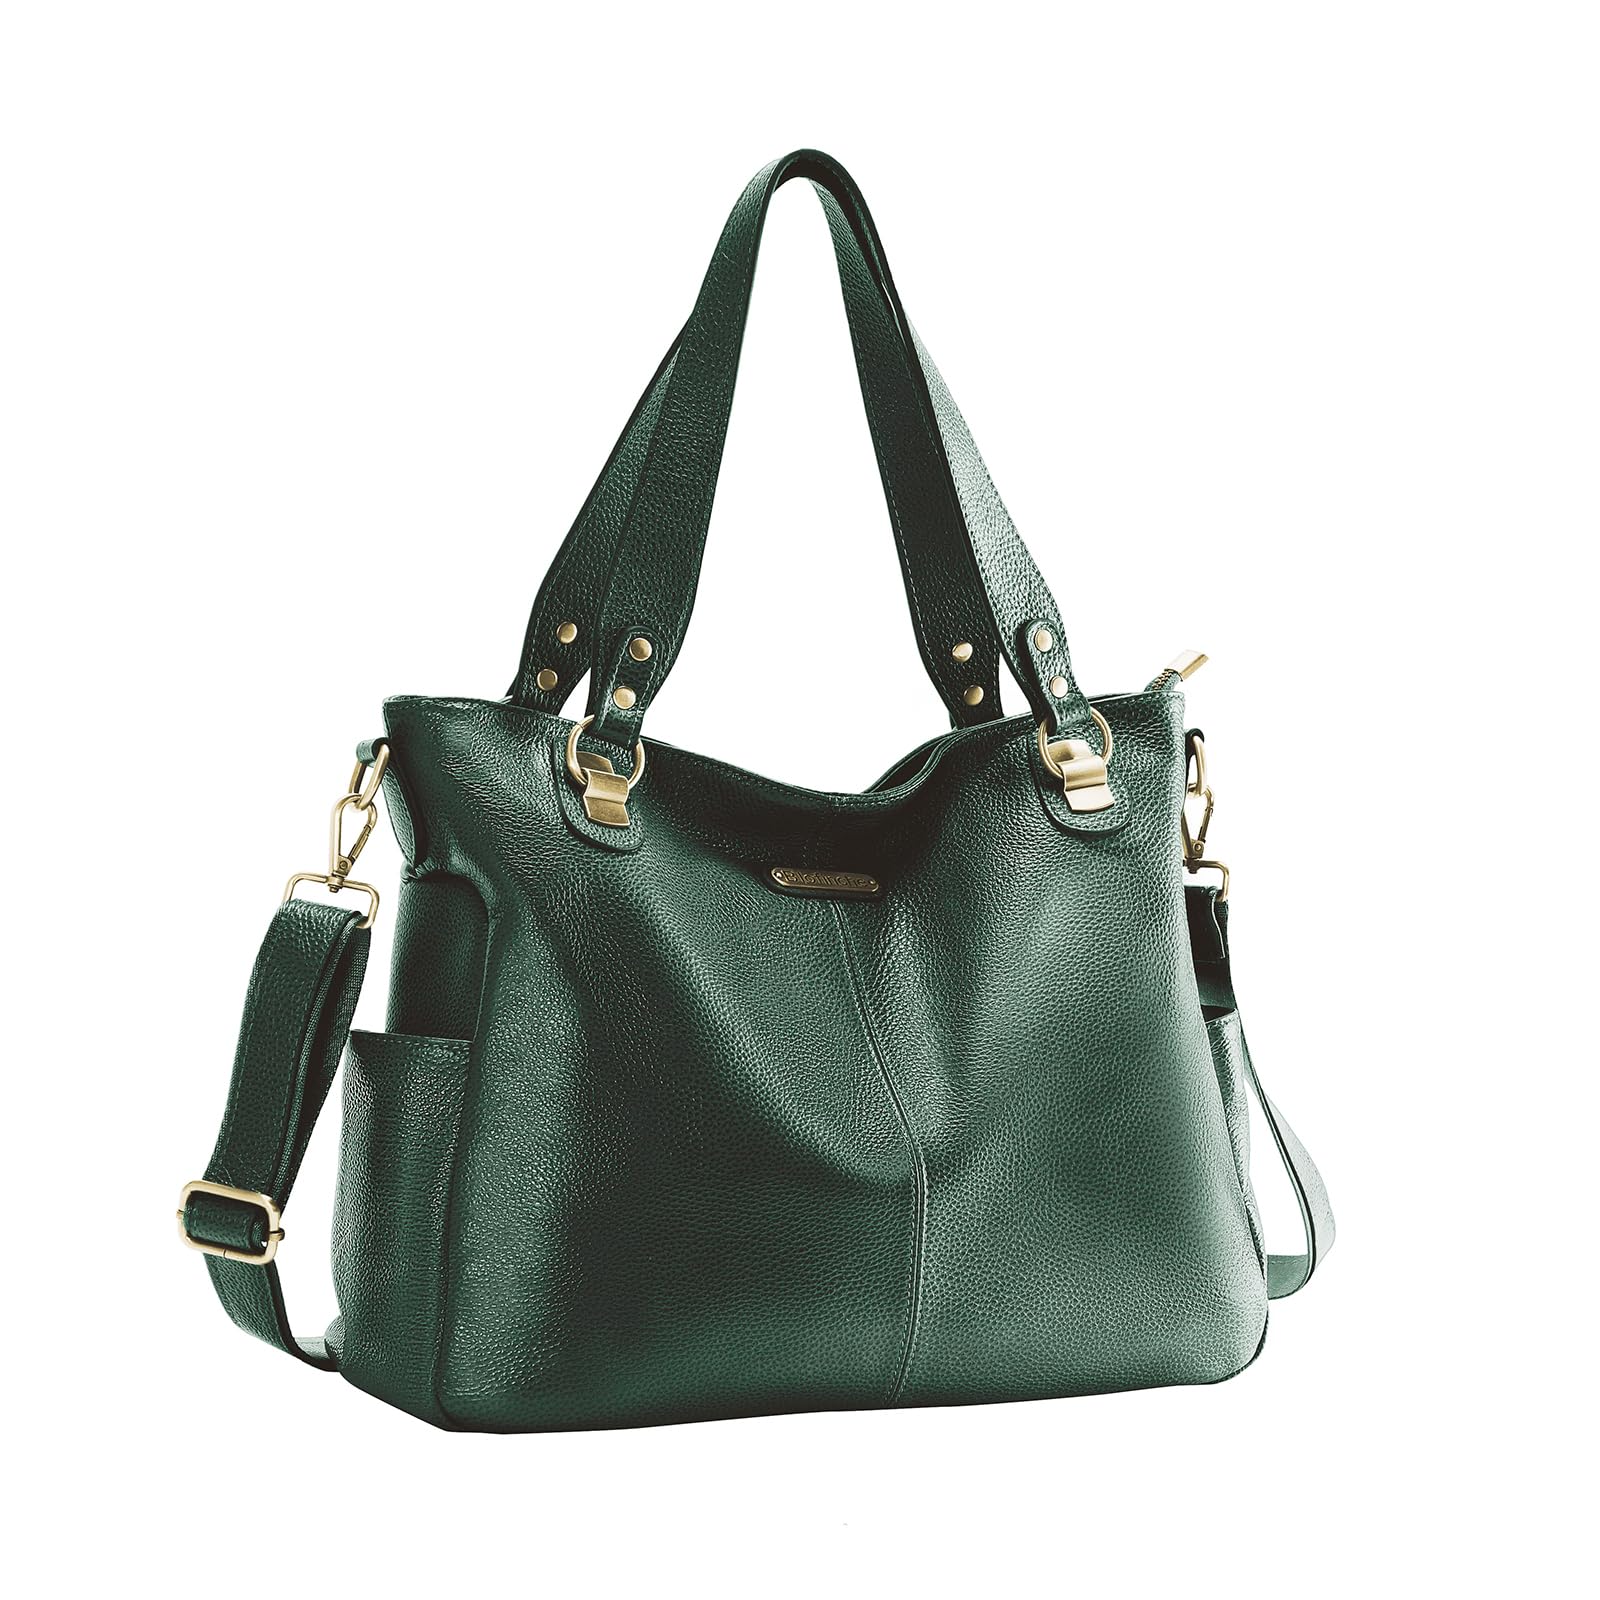 Blofinche Genuine Leather Tote Bag Womens Top Satchel Purses ladies Handbags Soft designer shoulder work bags dark green